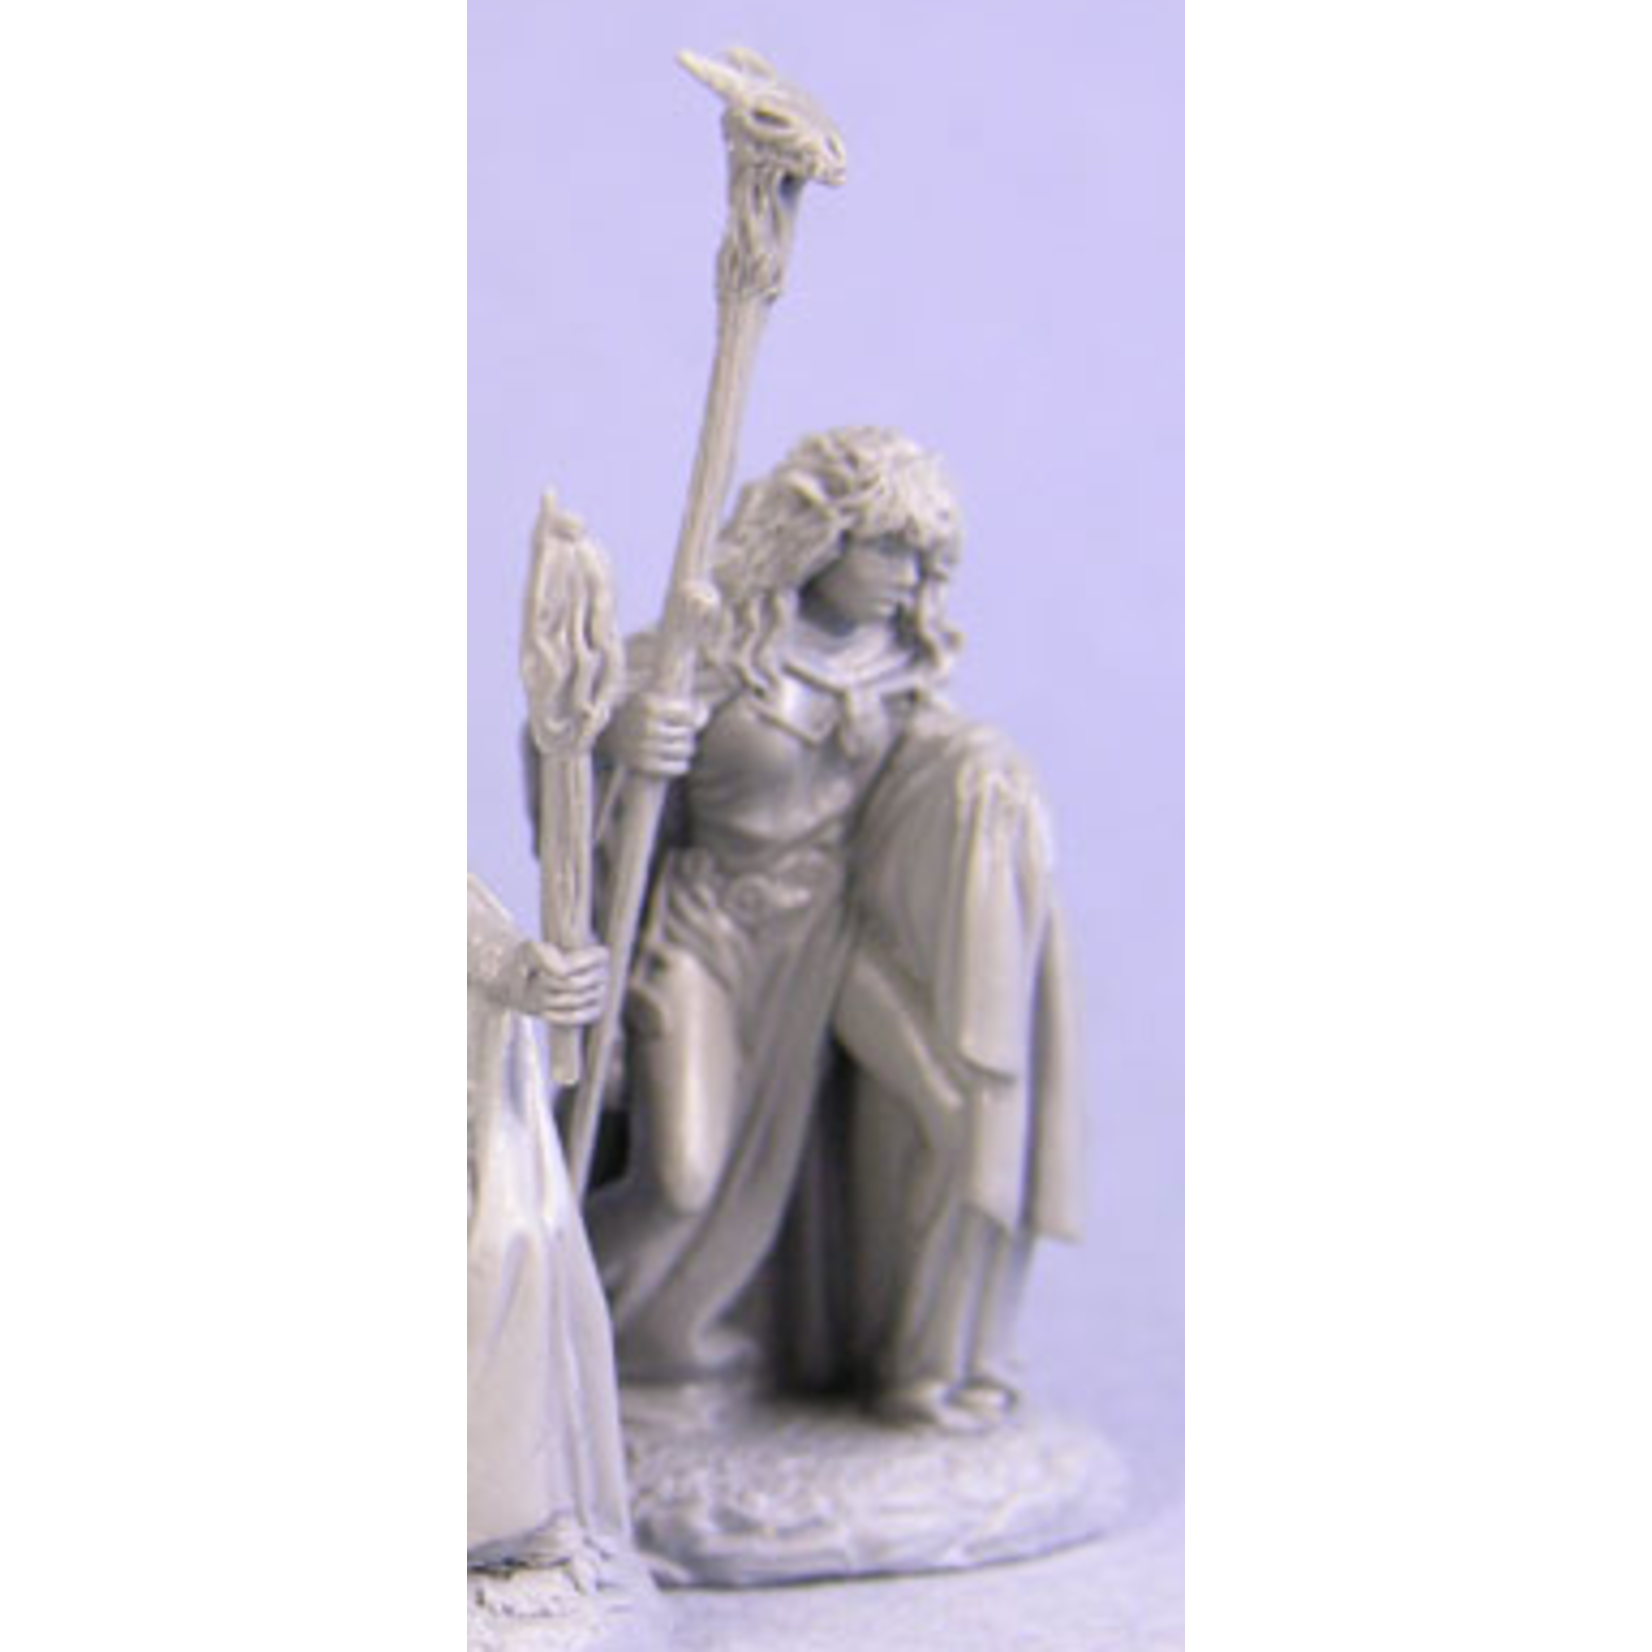 Dark Sword Miniatures Dark Sword Miniatures (Metal) Elmore Masterworks - Female Elven Mage w/ Staff (1)